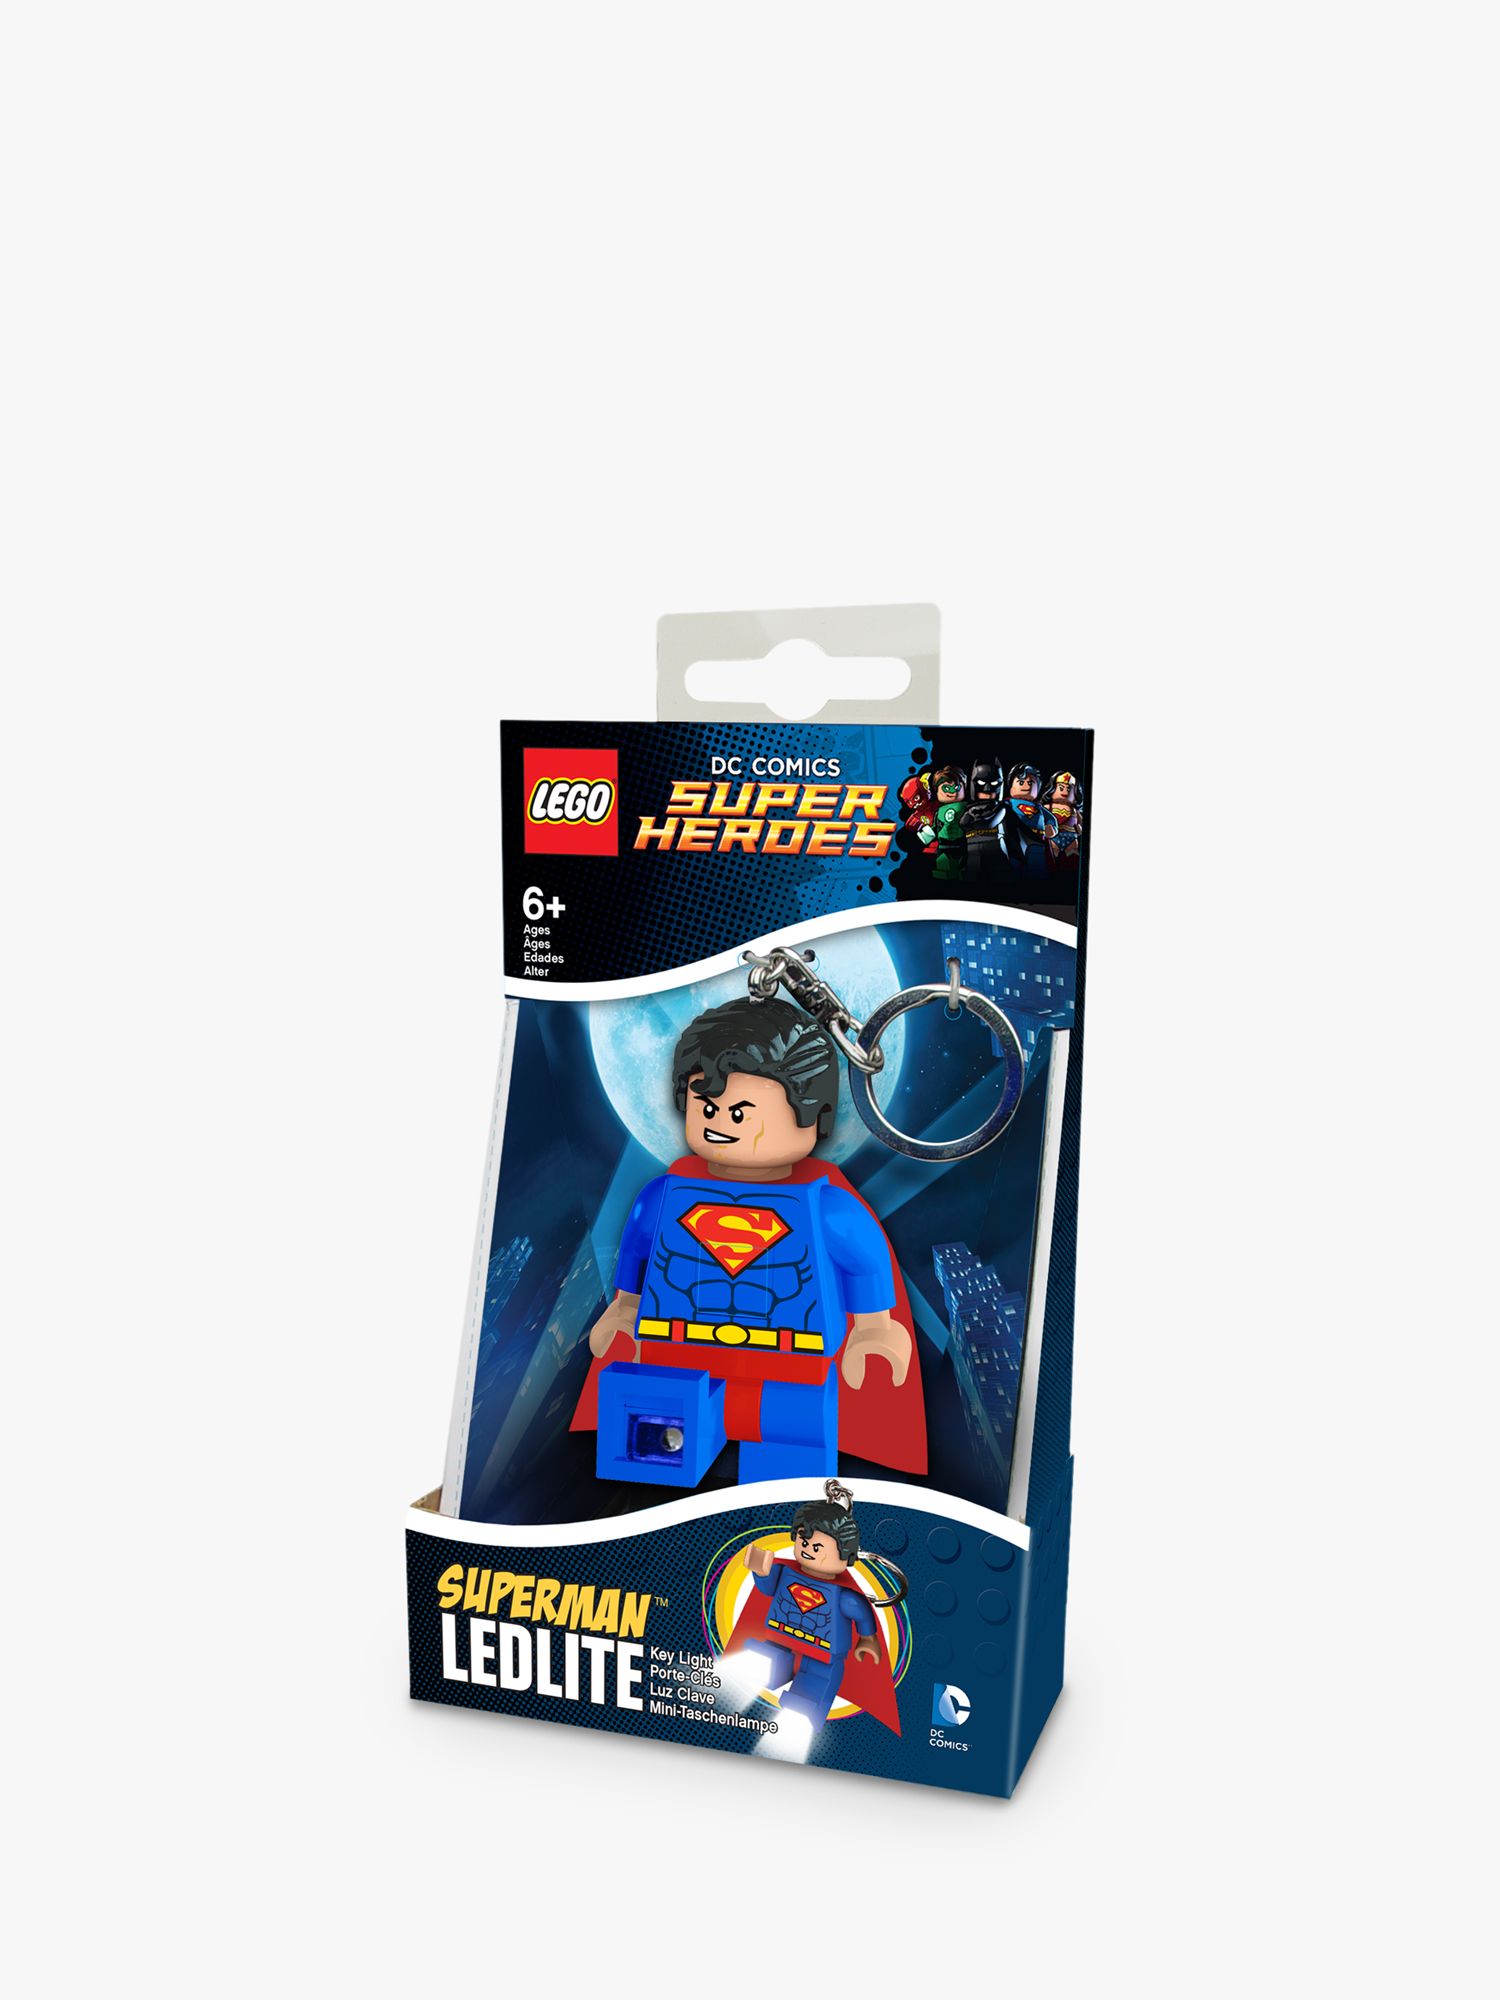 superman lego keyring